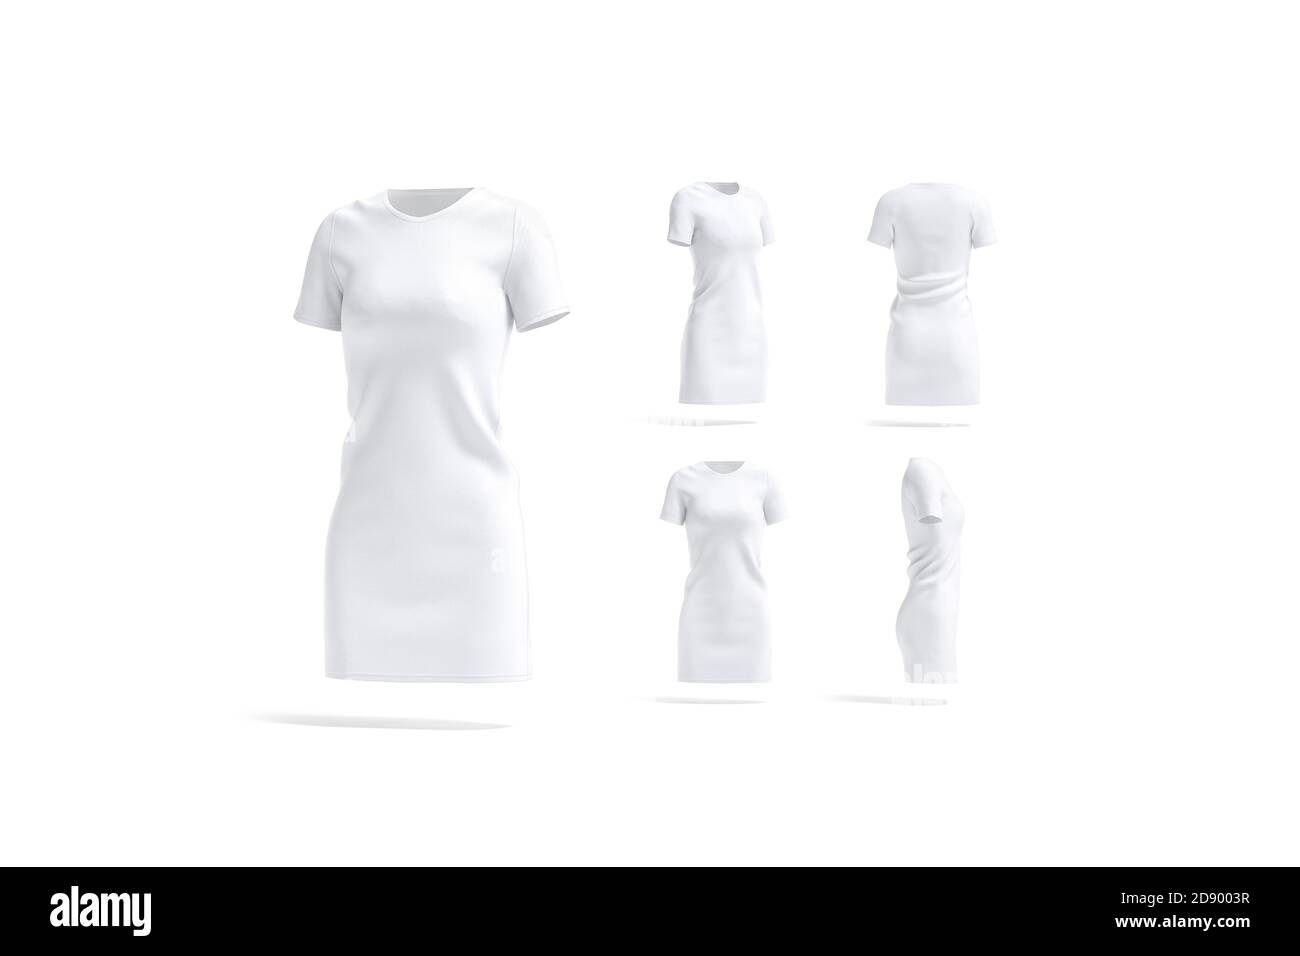 Mockup di abiti bianchi in tessuto bianco, viste diverse Foto Stock